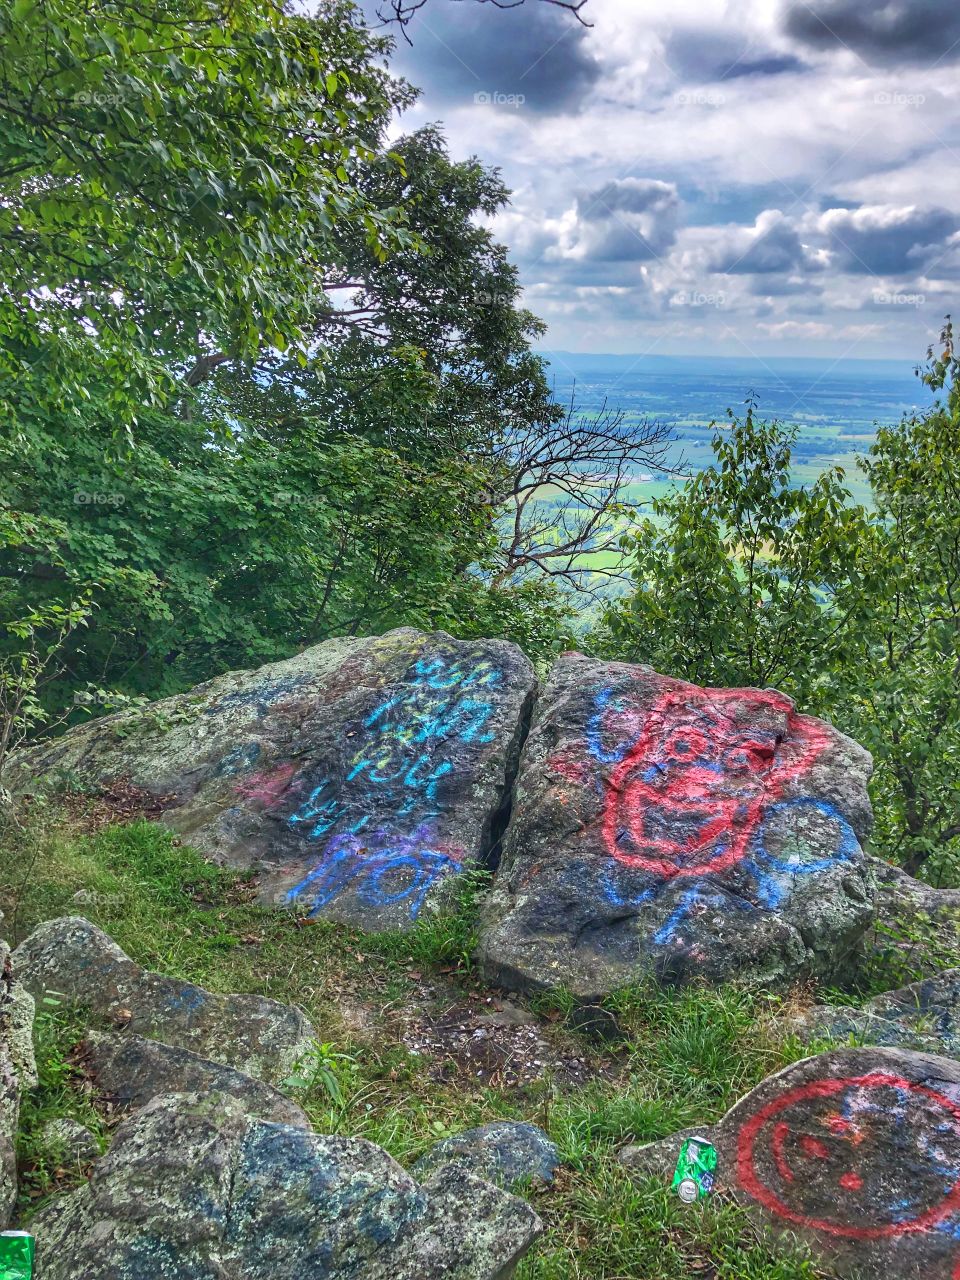 High rock overlook in cascade Maryland graffiti rocks 